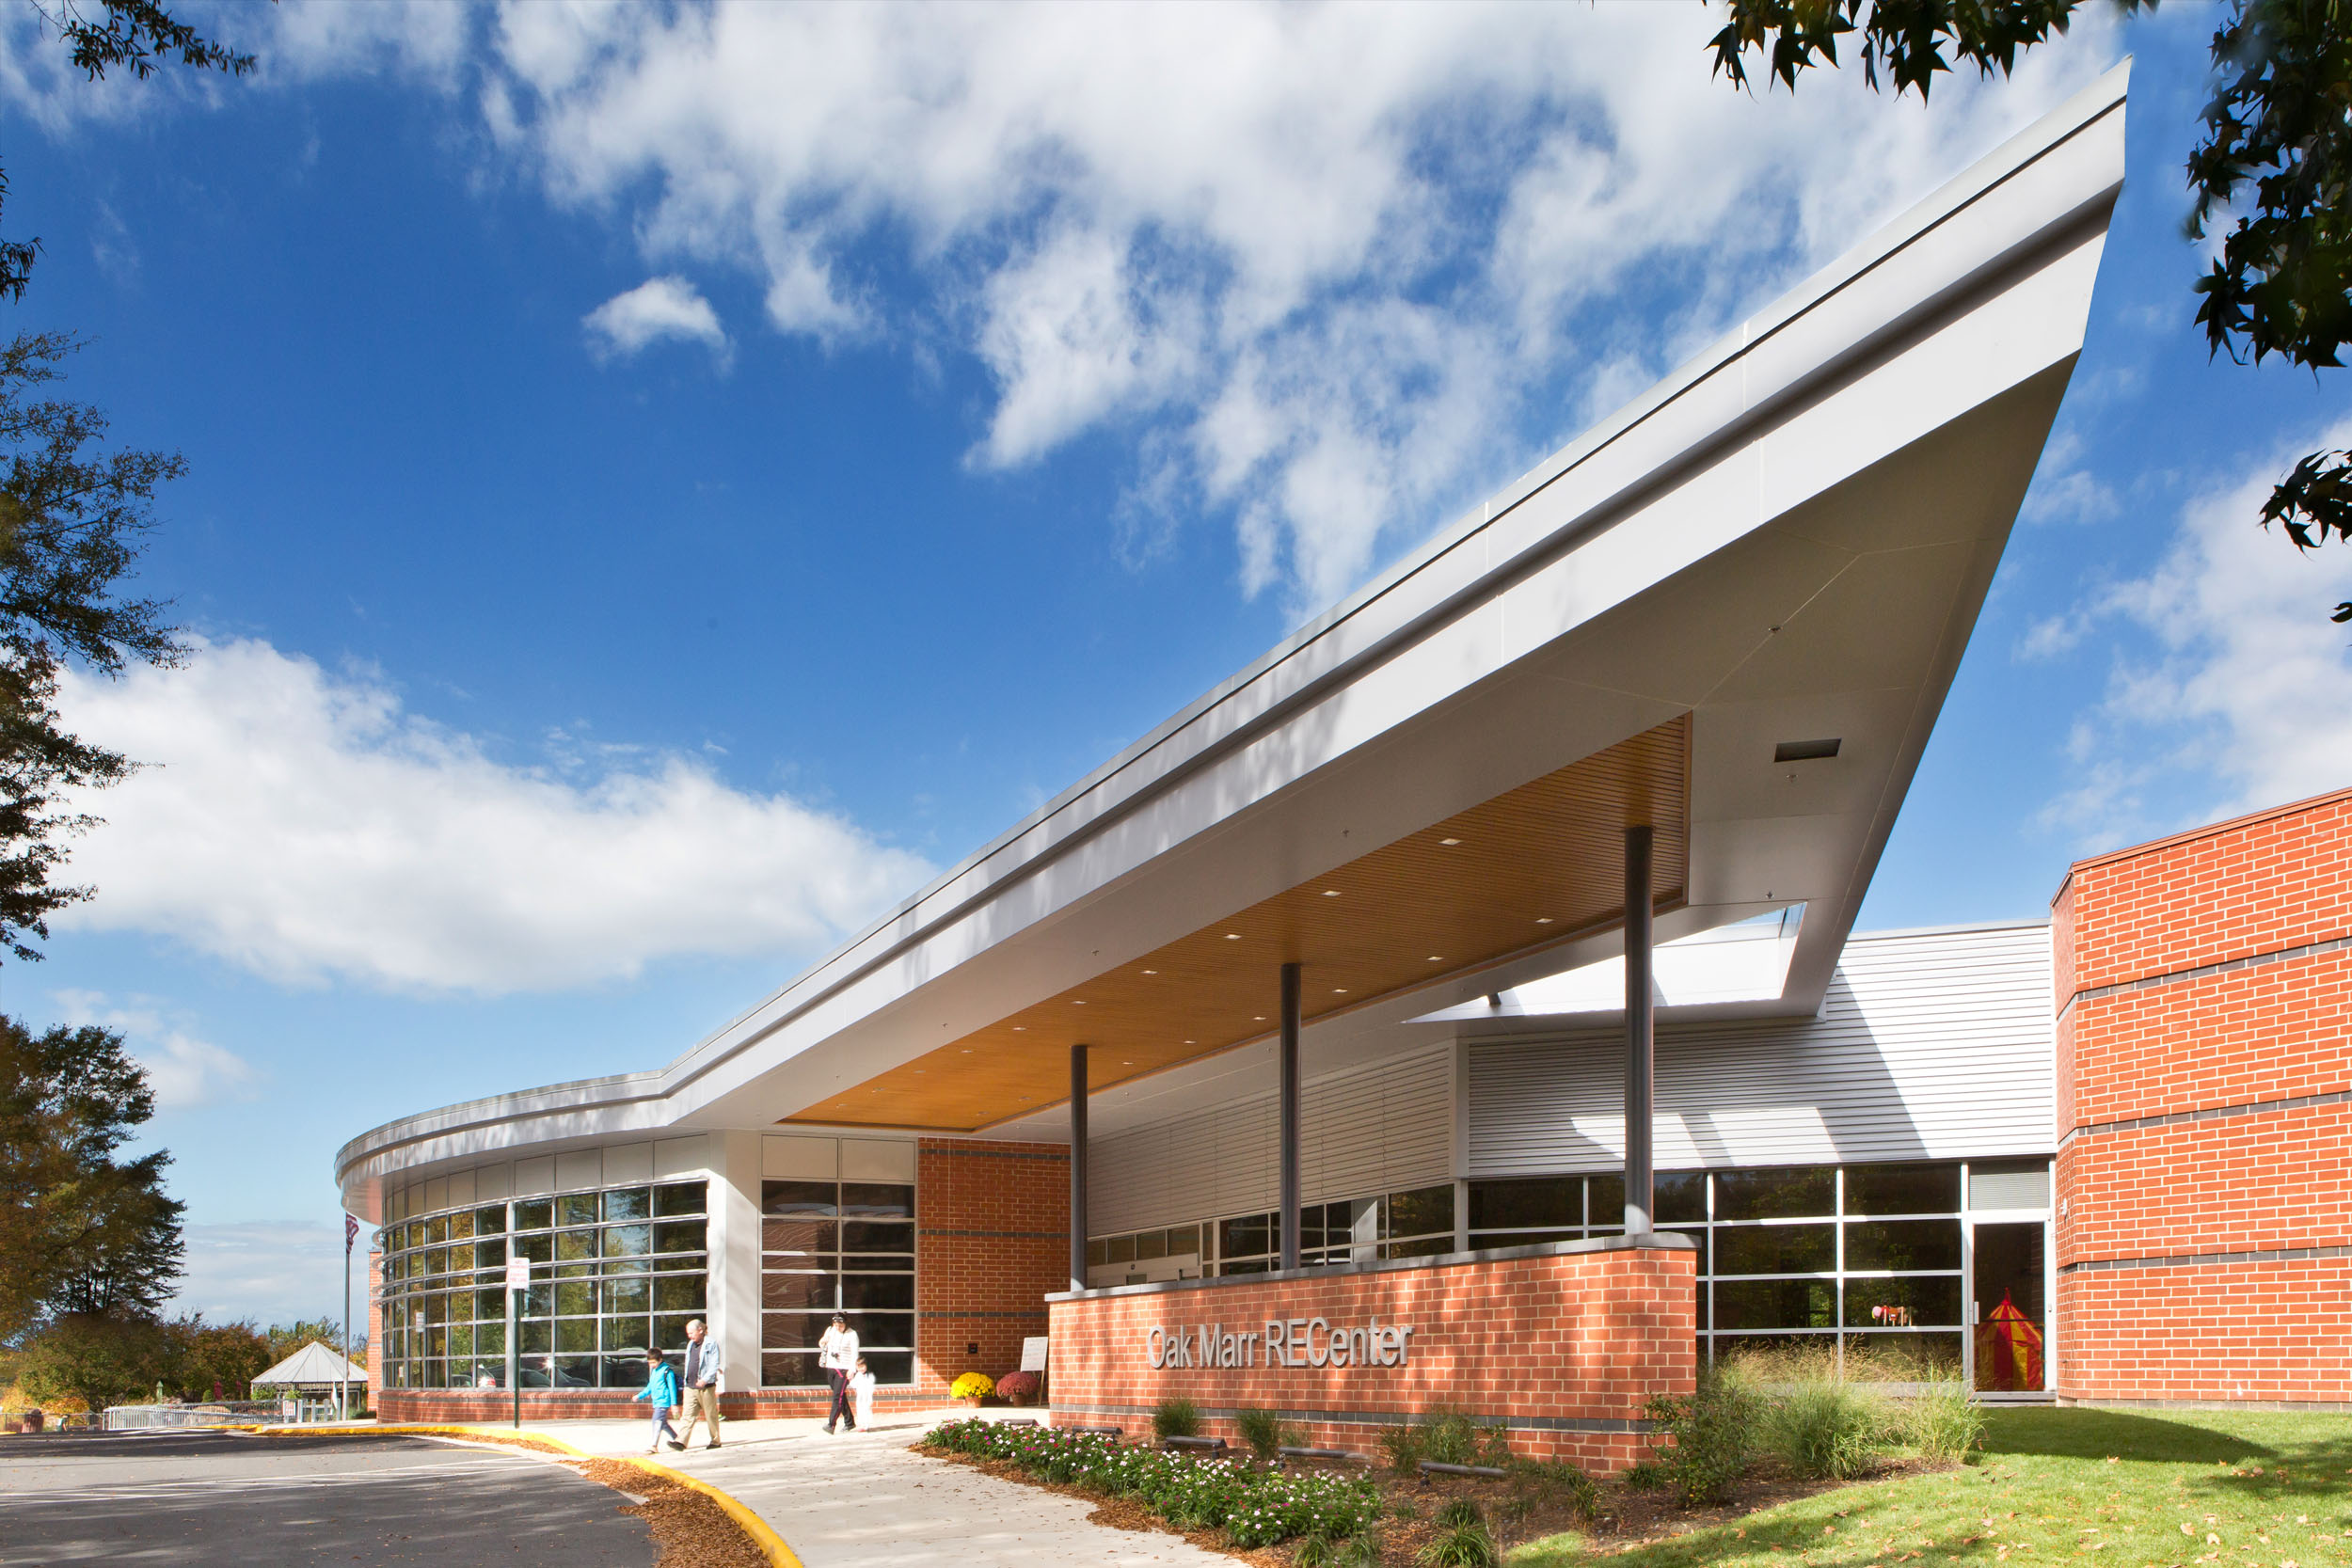 Oak Marr Recreation Center Hughes Group Architects